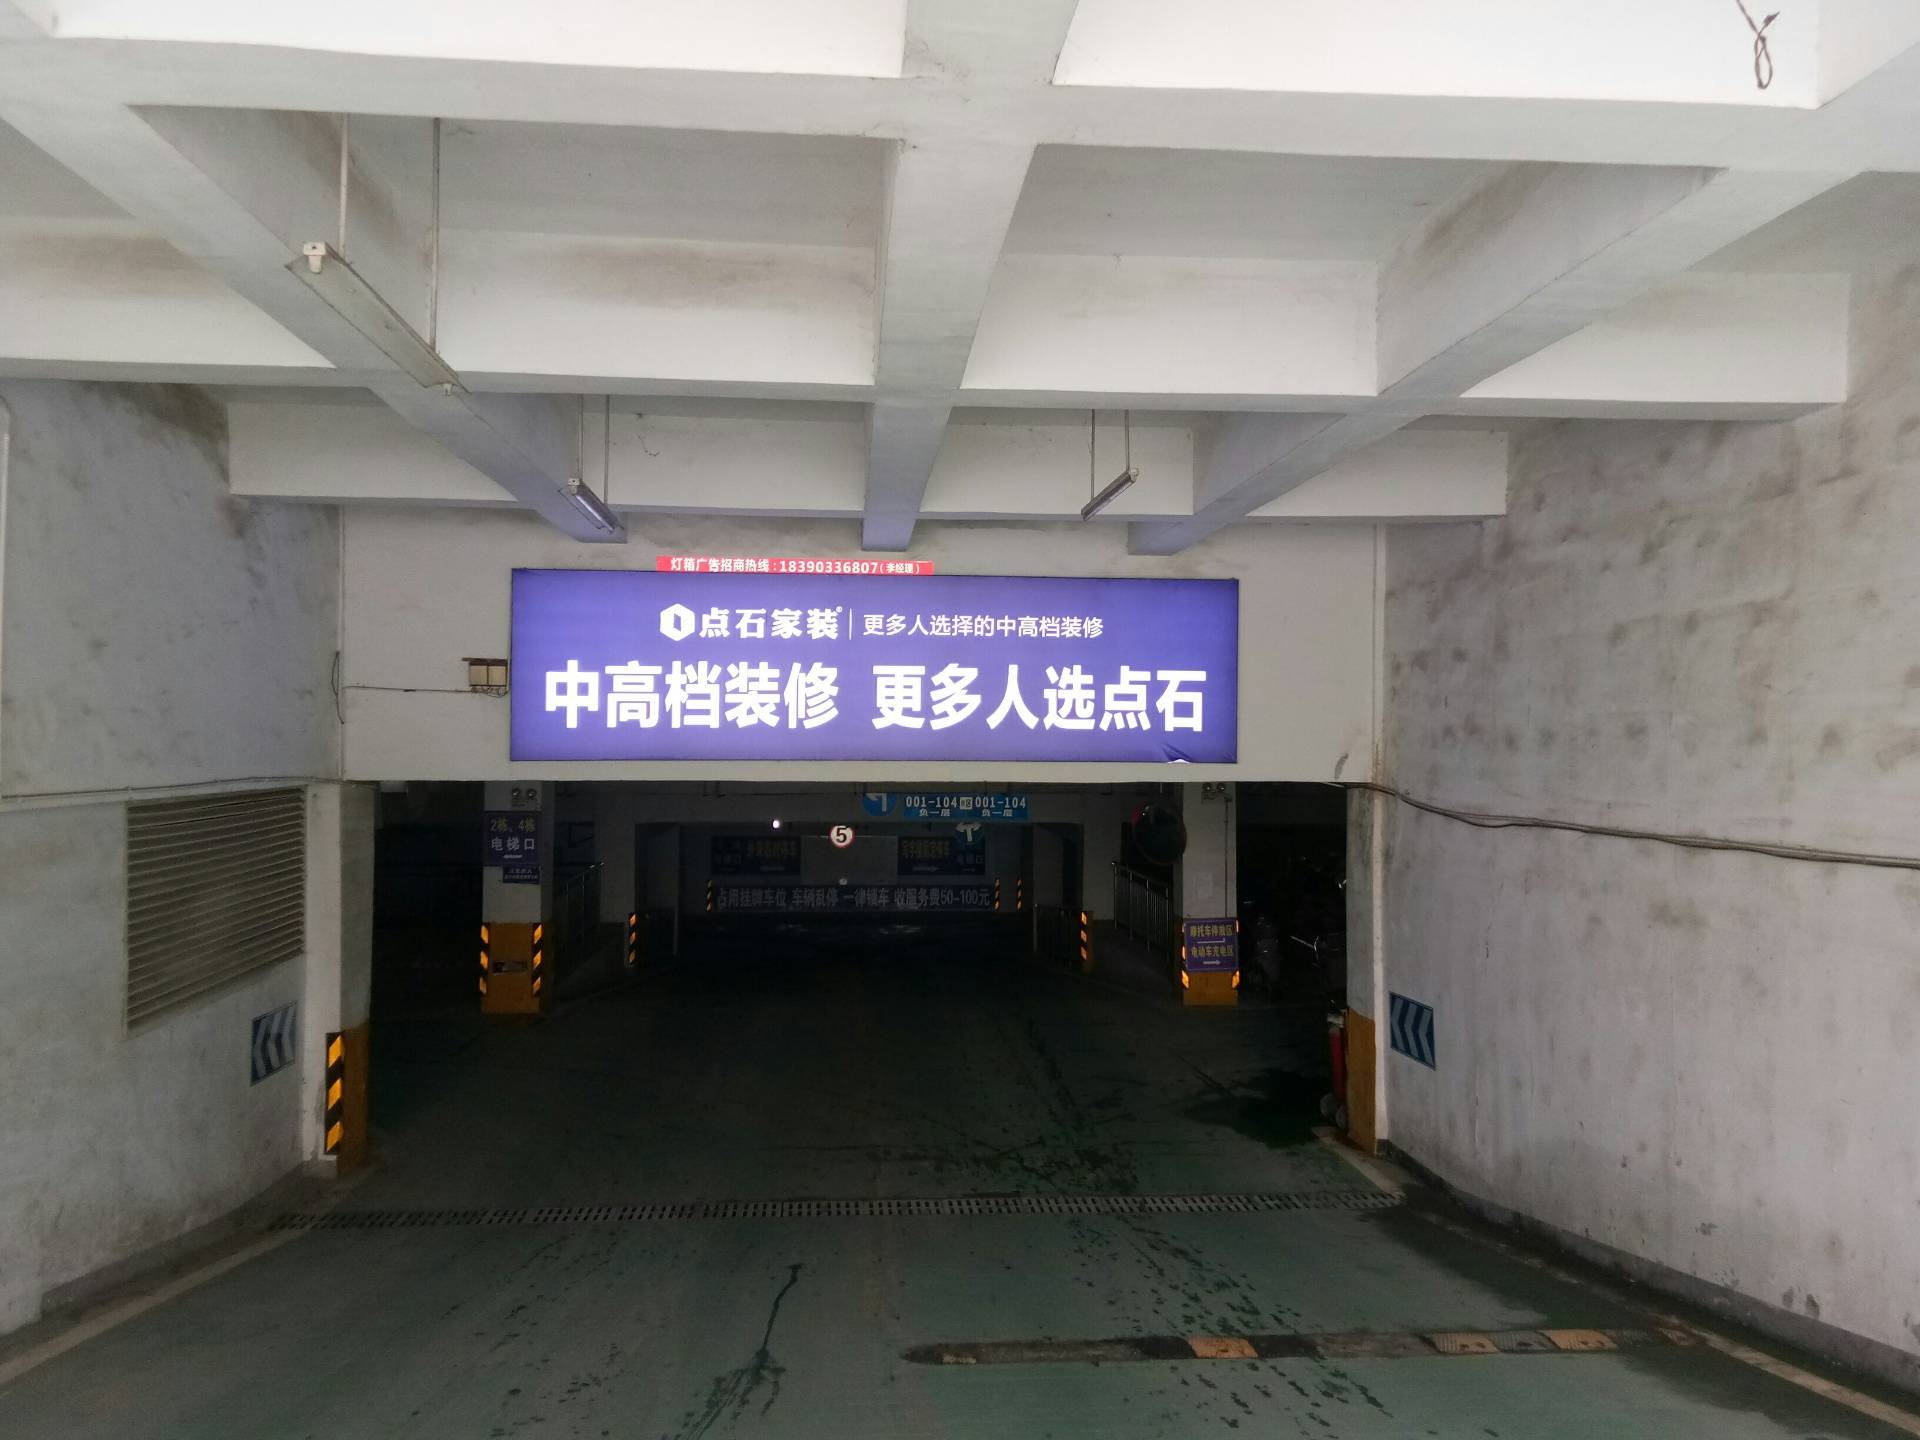 金磊富域城停車場燈箱實景圖